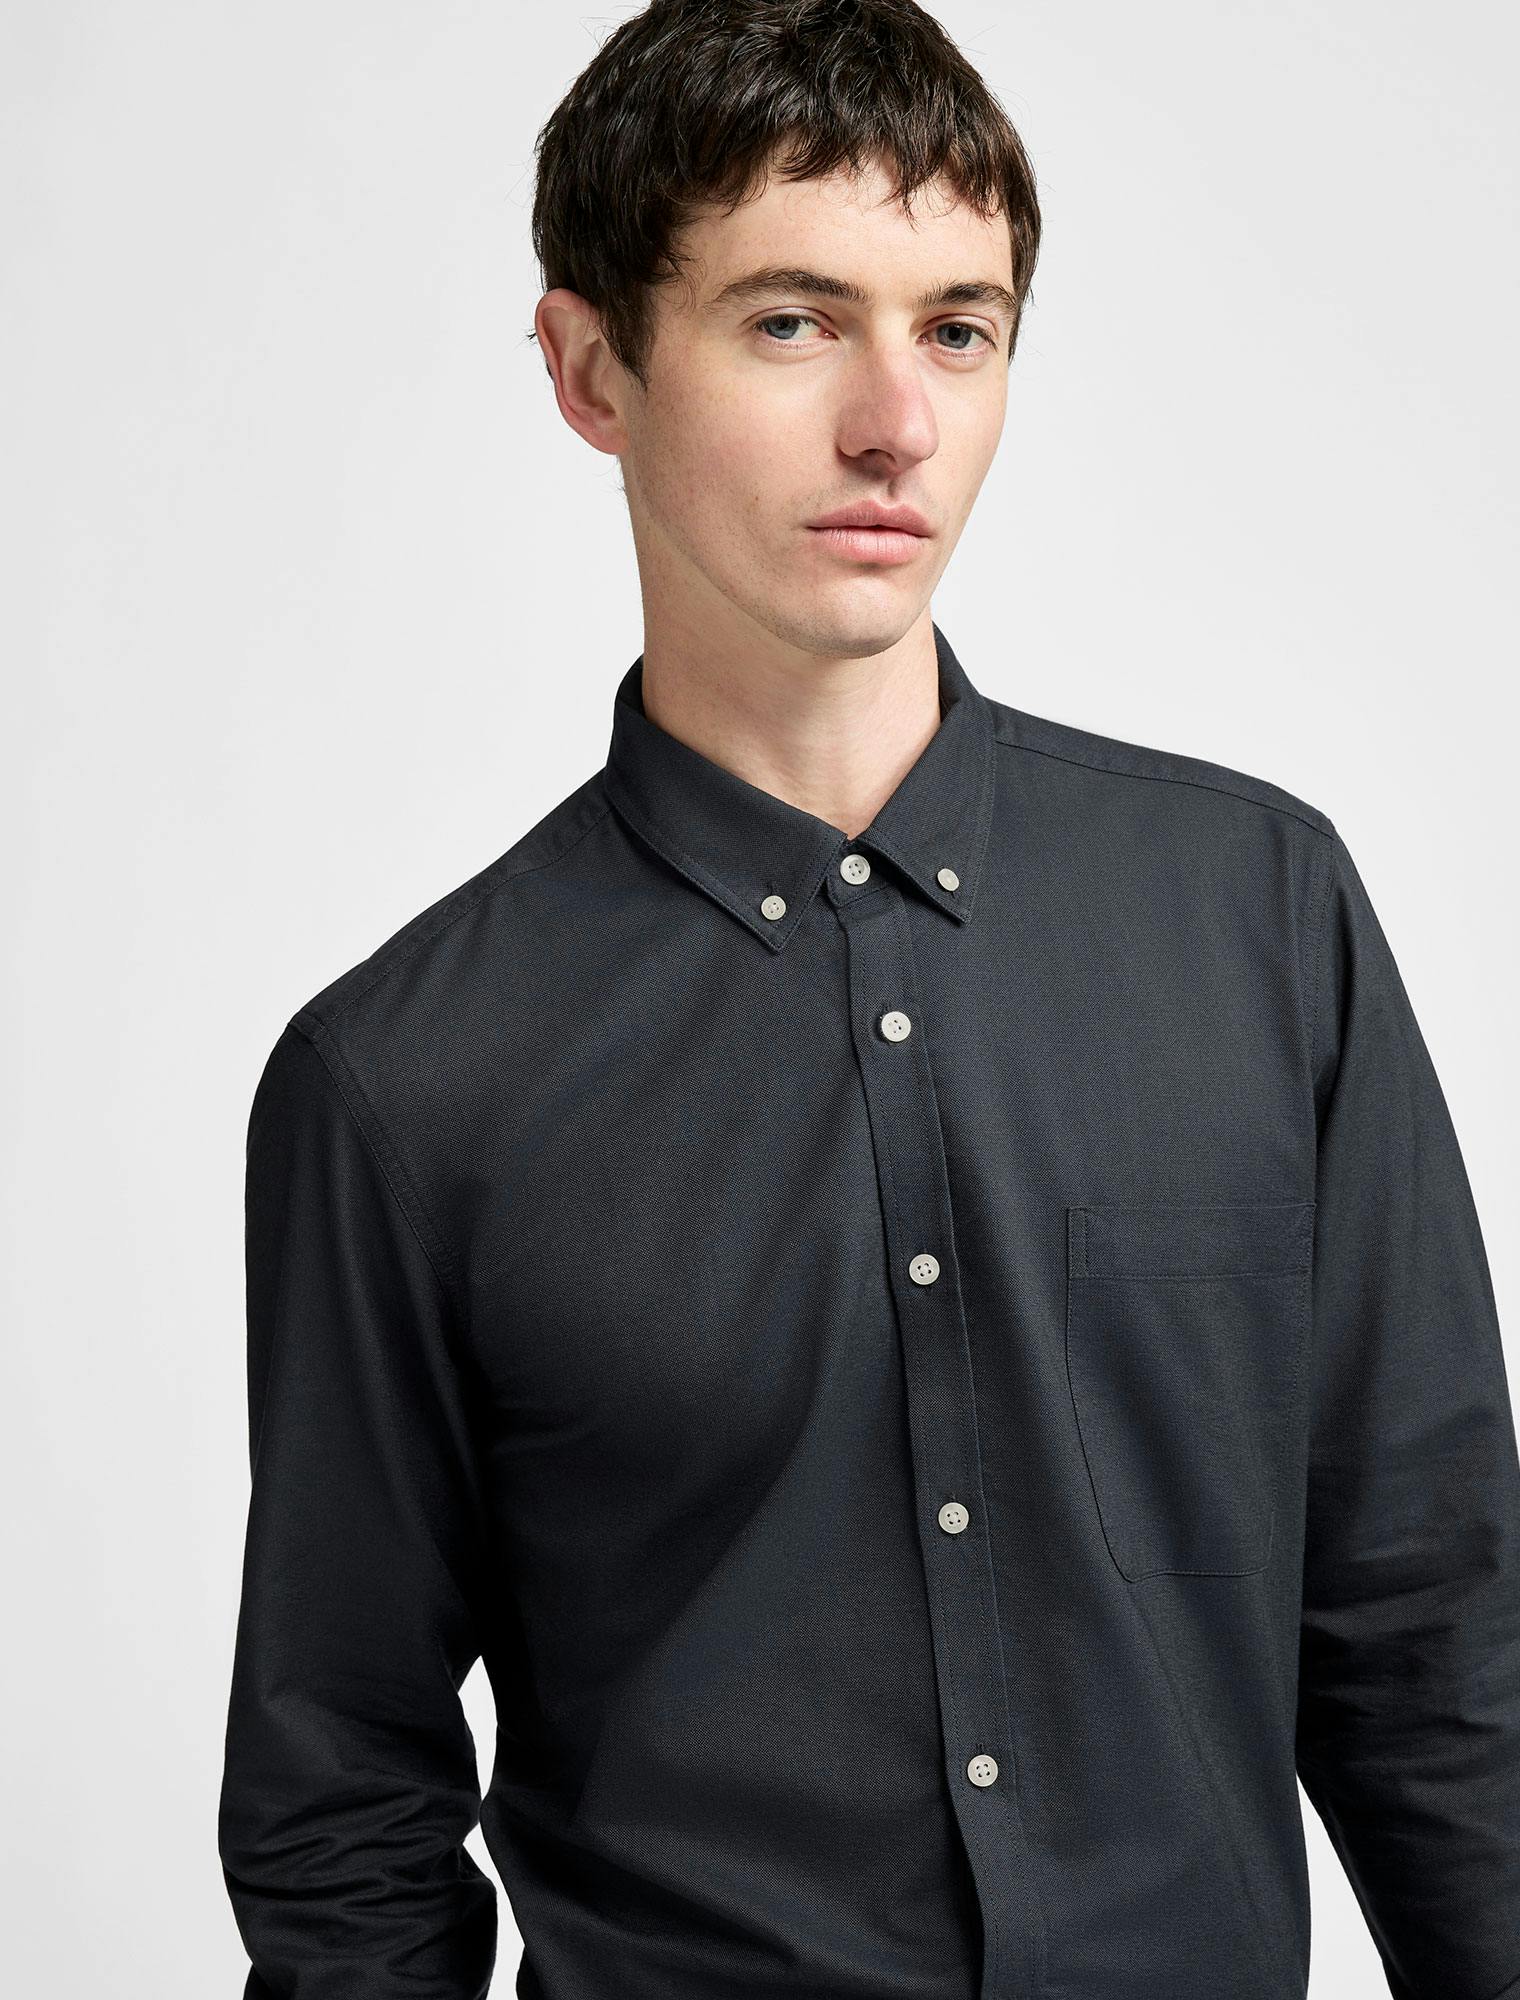 Men's Long Sleeve Oxford Shirt - Charcoal Button Down